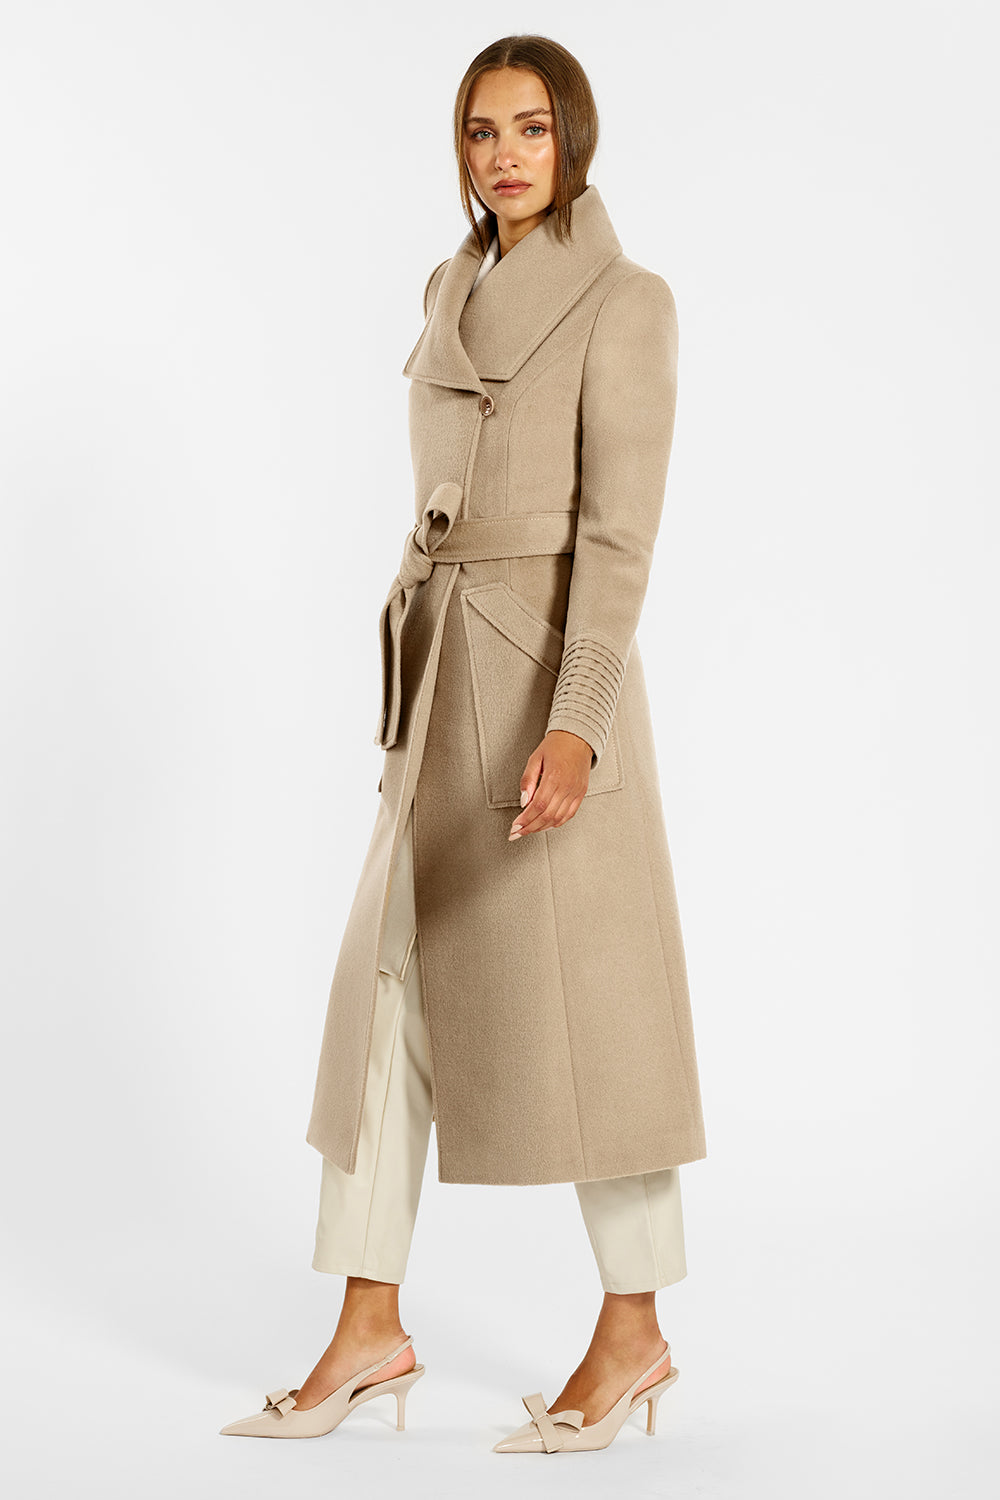  Calvin Klein Women's Wool Jacket, Camel, XX-Small